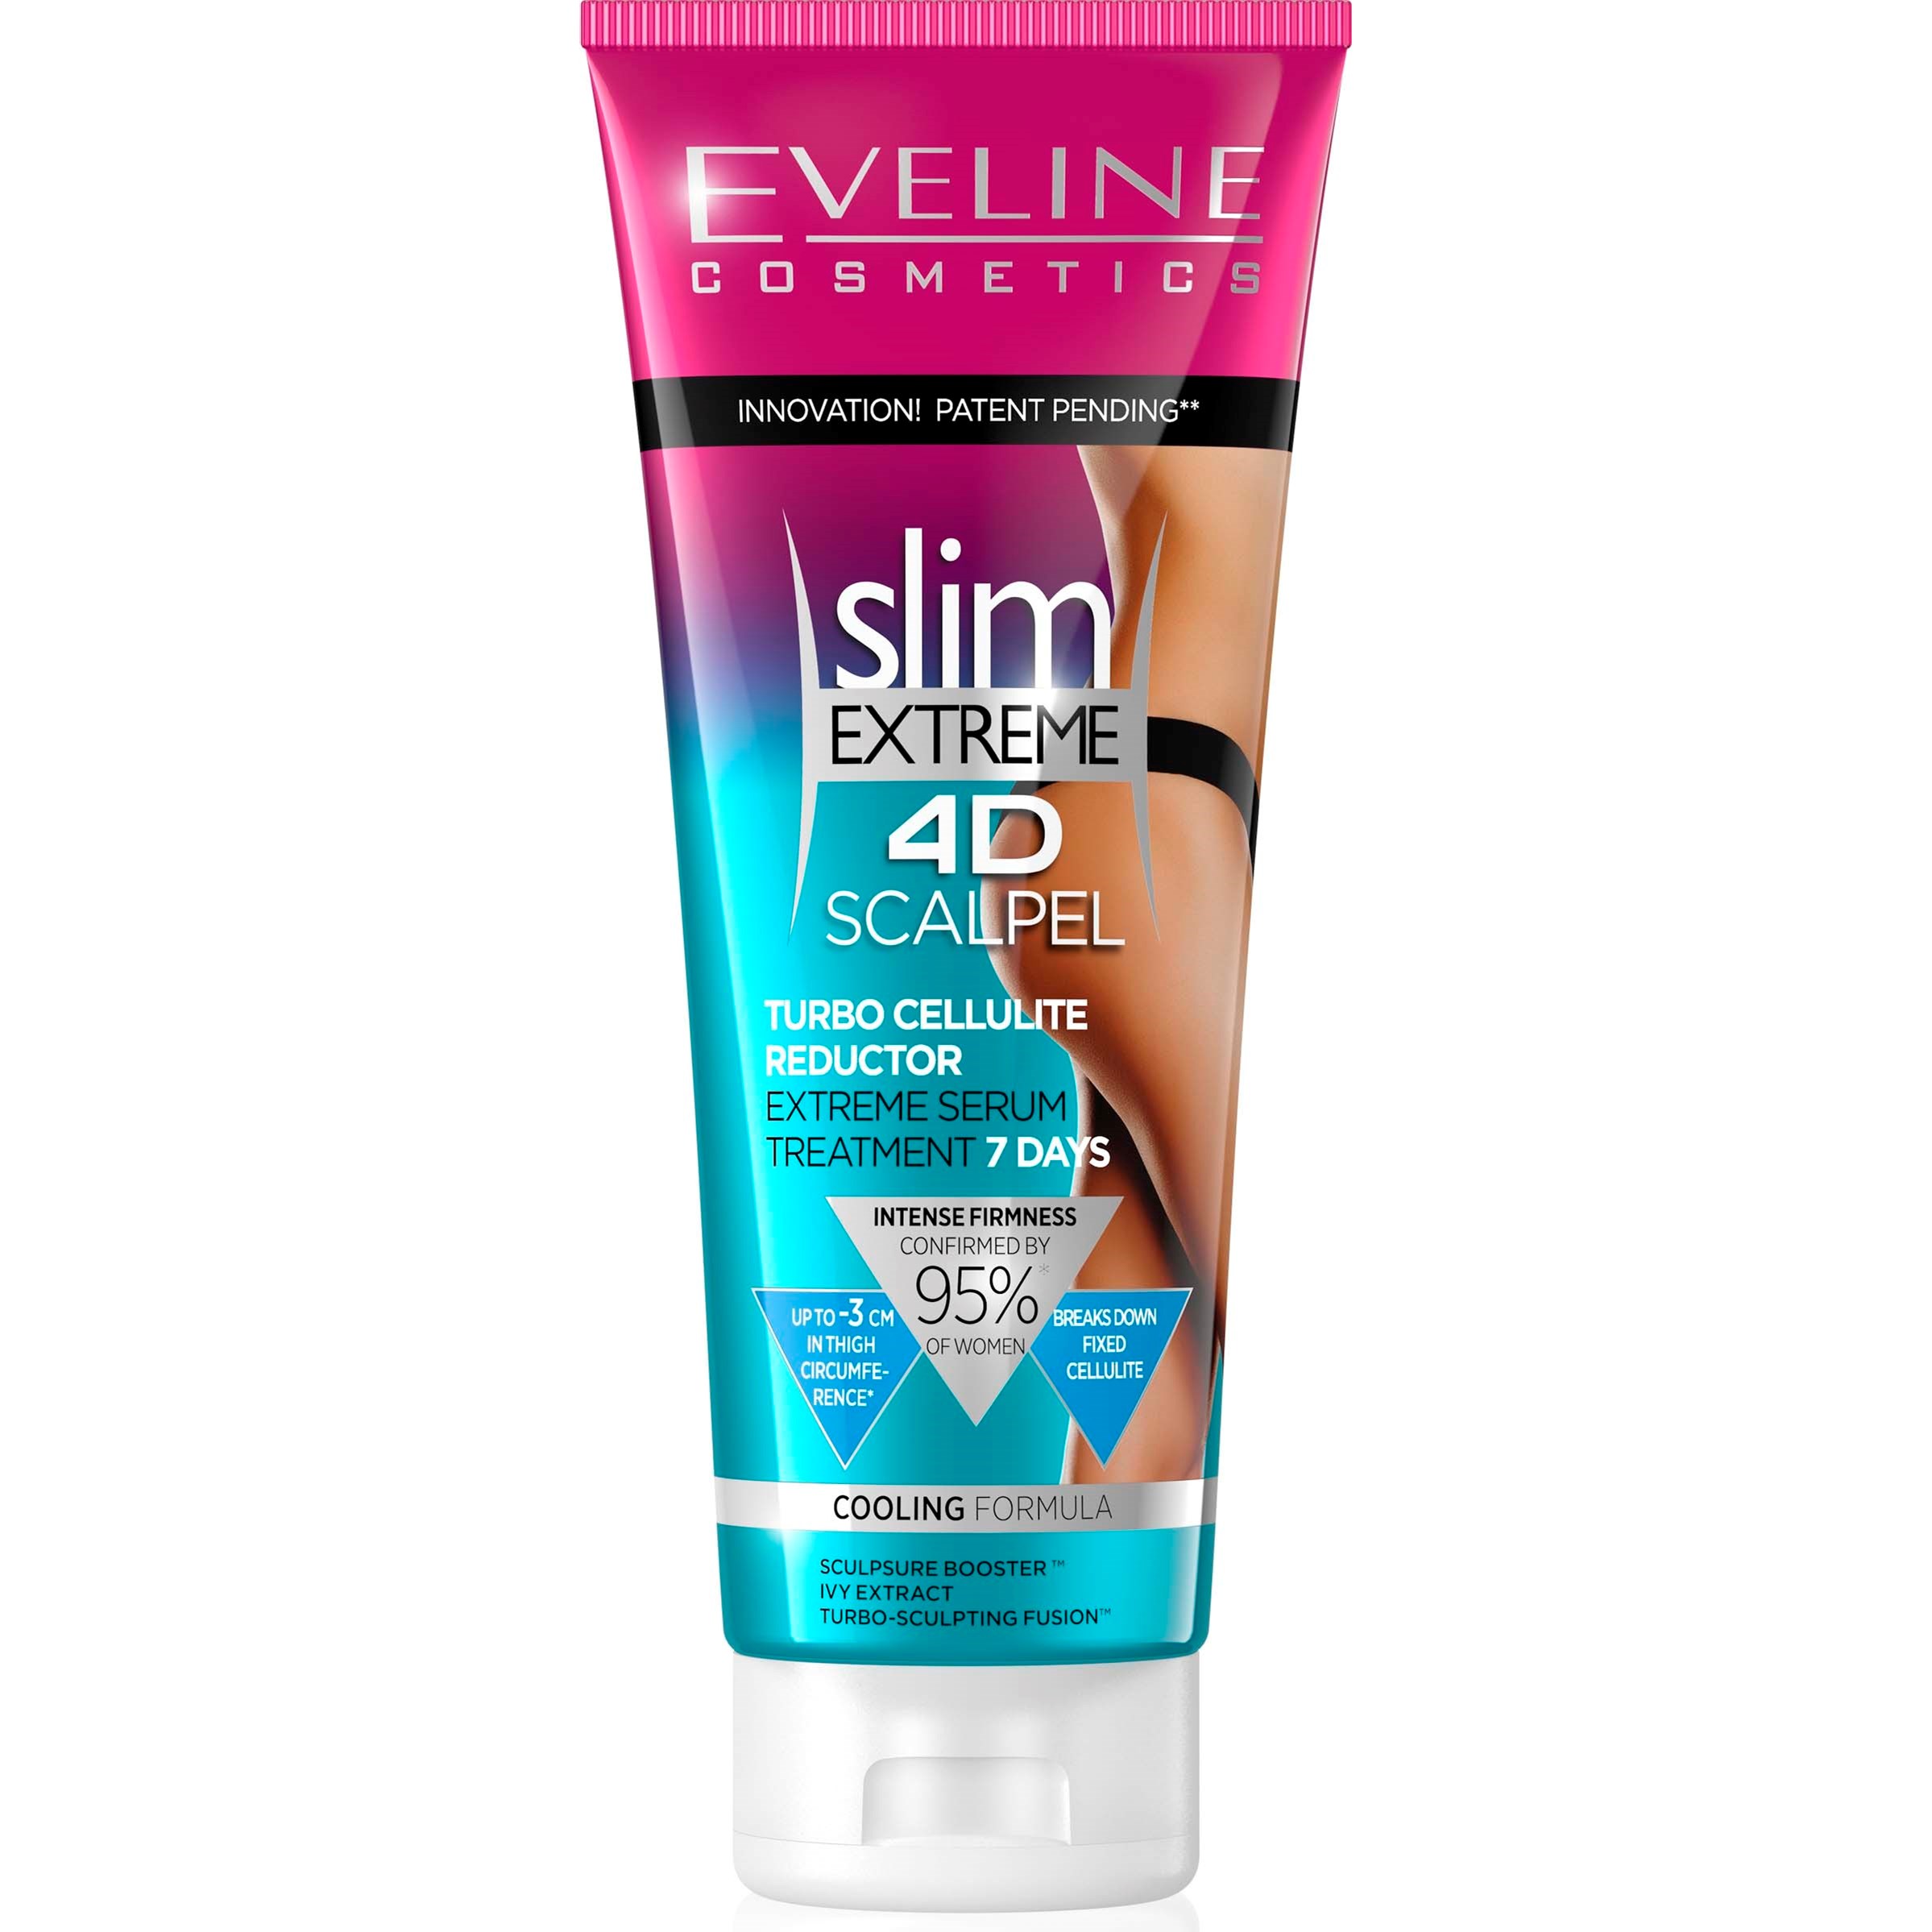 Eveline Cosmetics Slim Extreme 4d Scalpel Turbo Cellulite Reductor 25